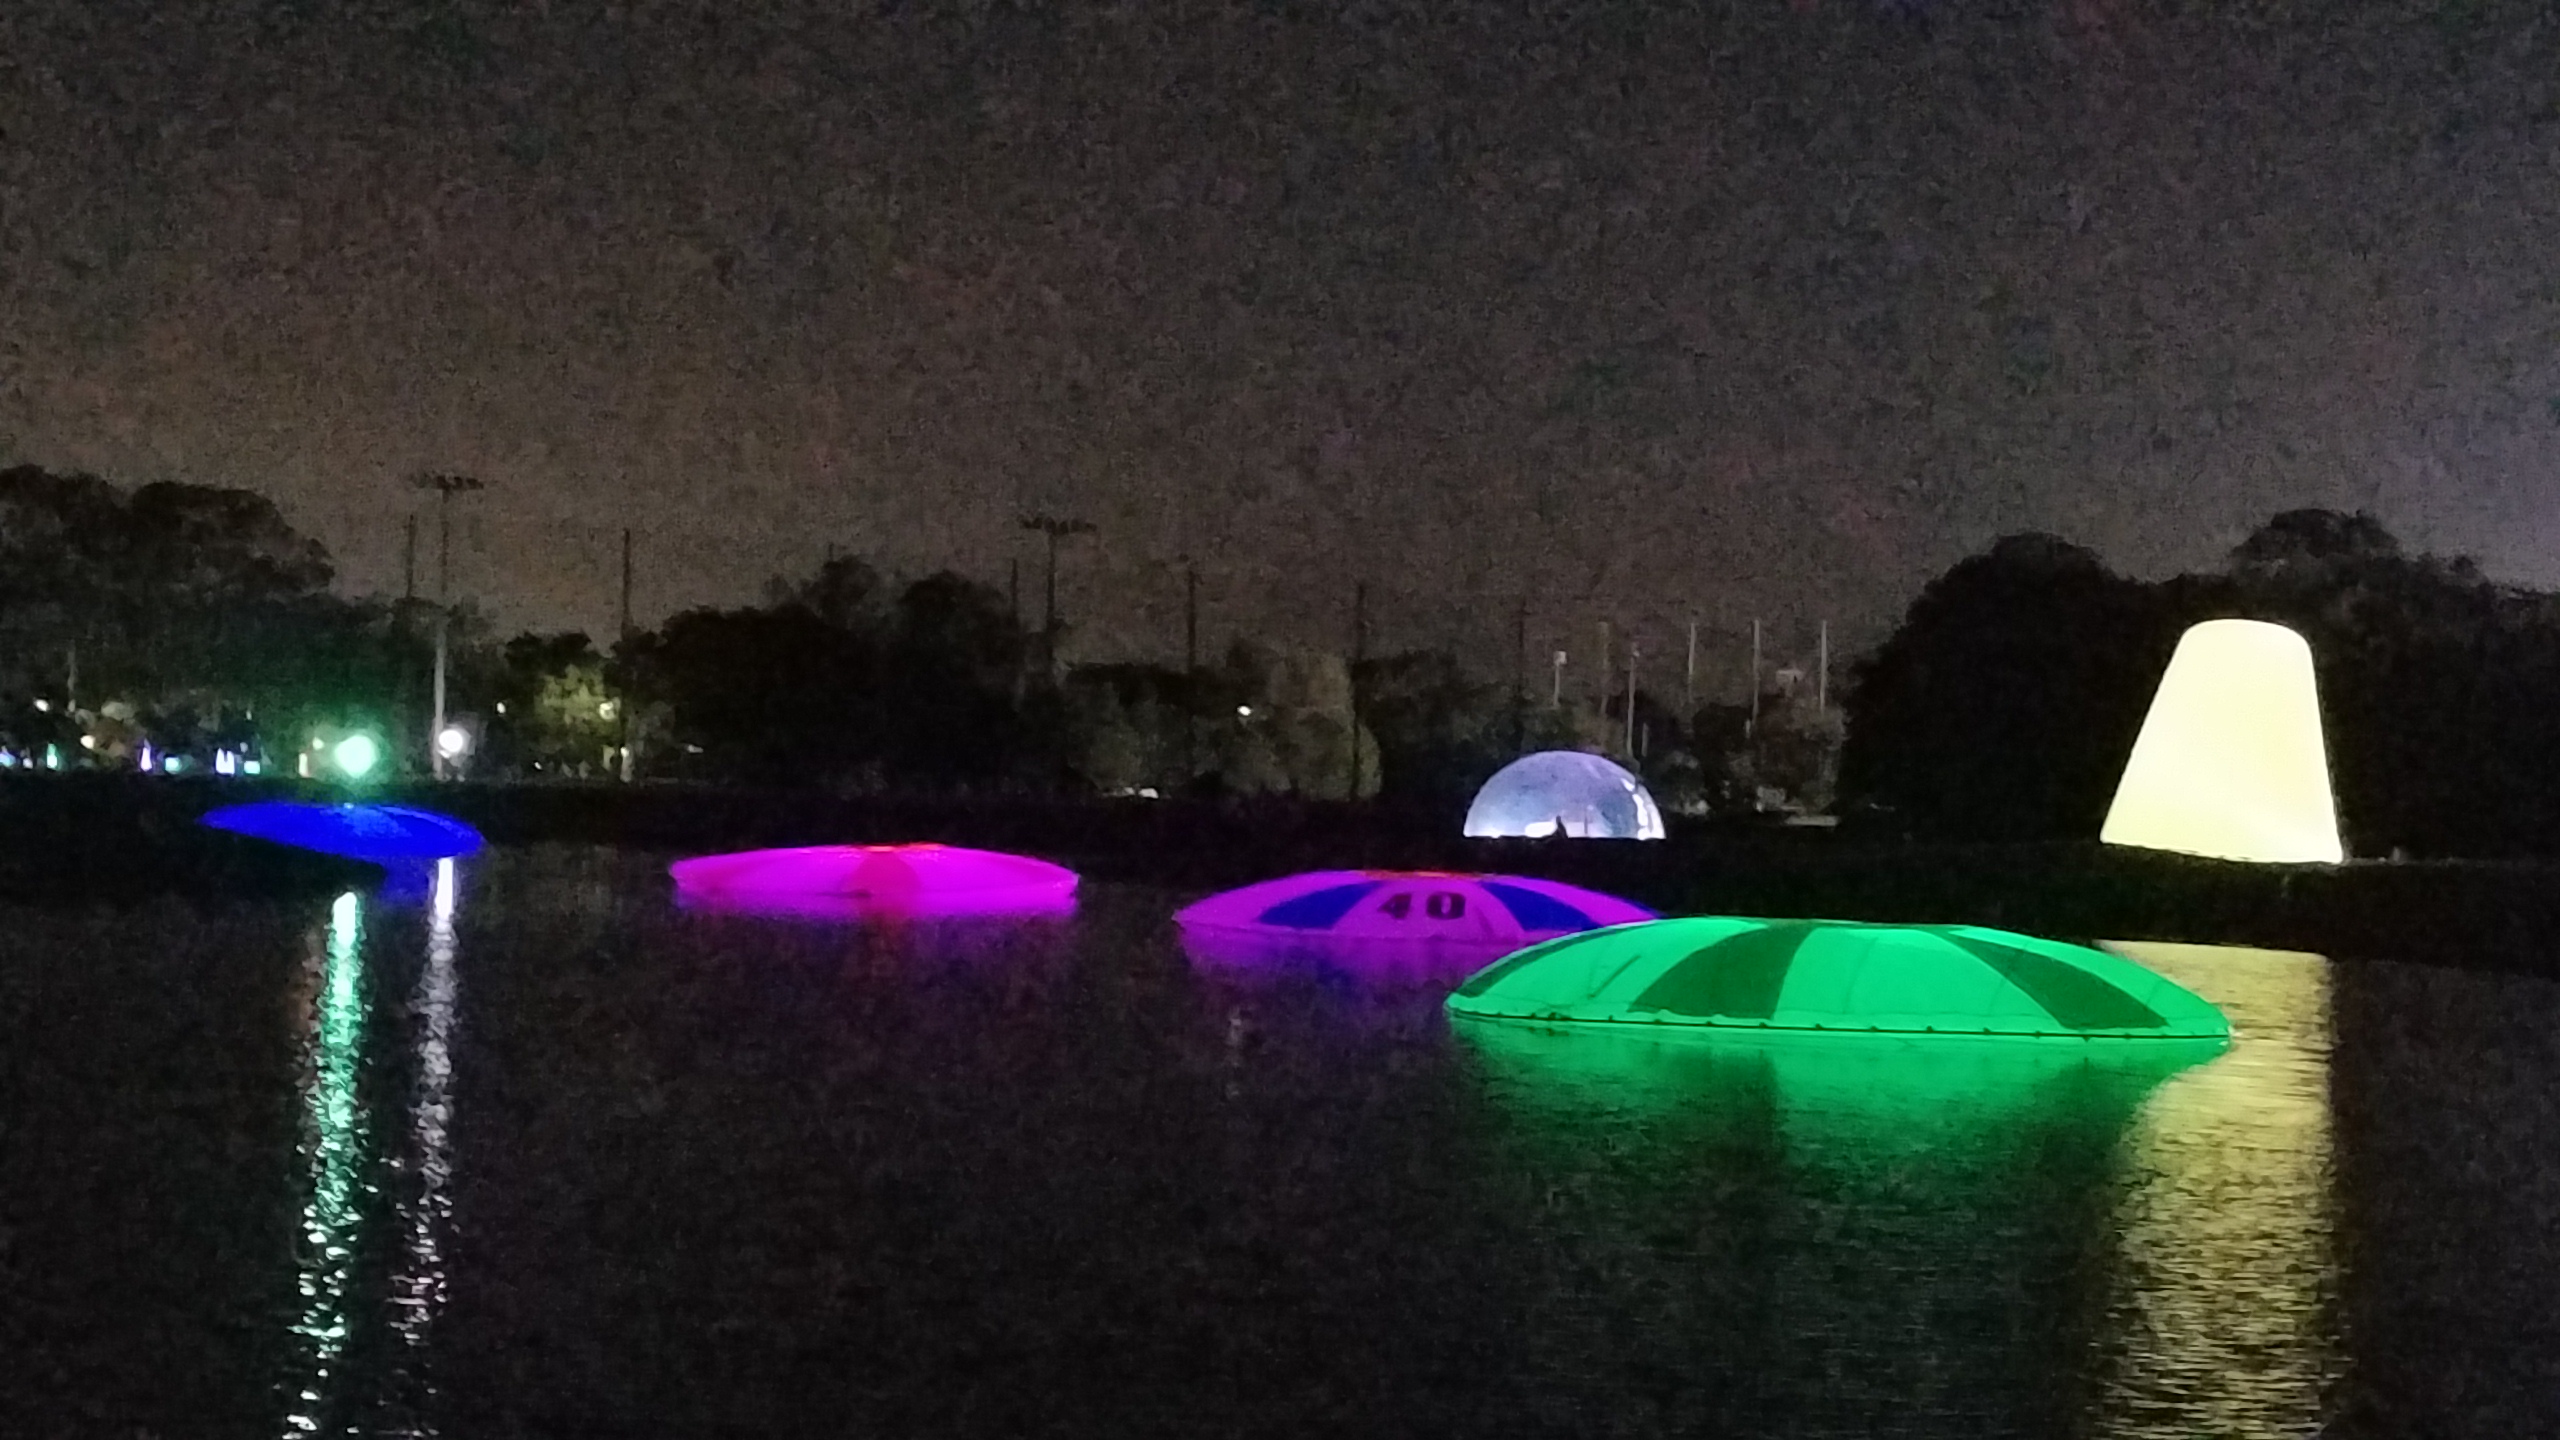 glowing targets that create an aqua driving range